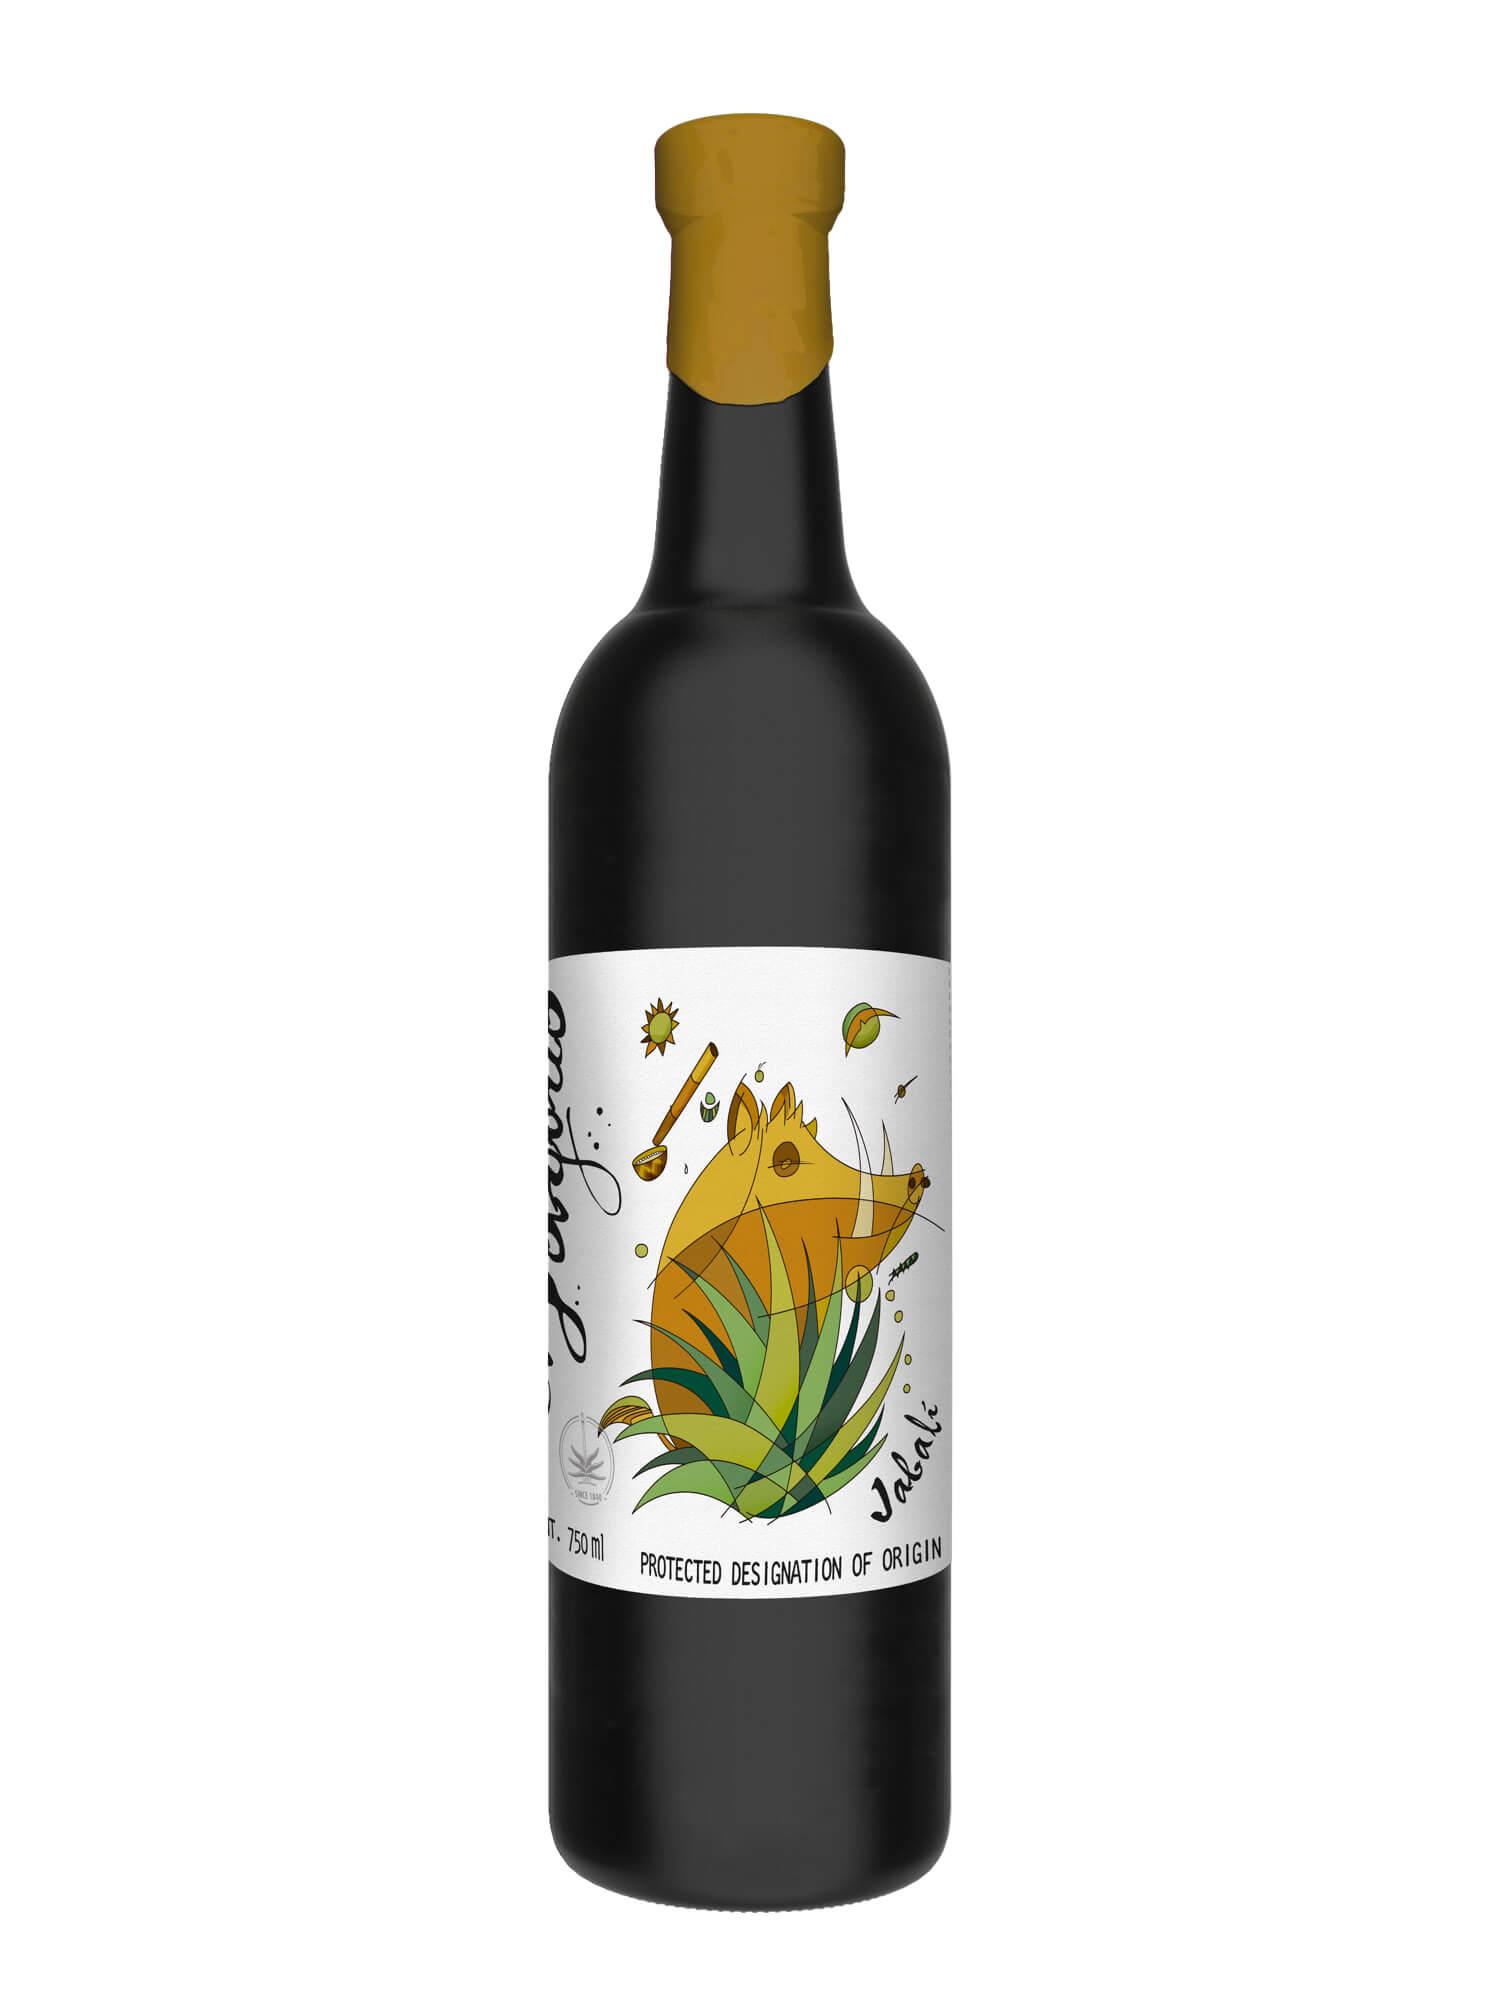 El Jolgorio Jabali Mezcal bottle